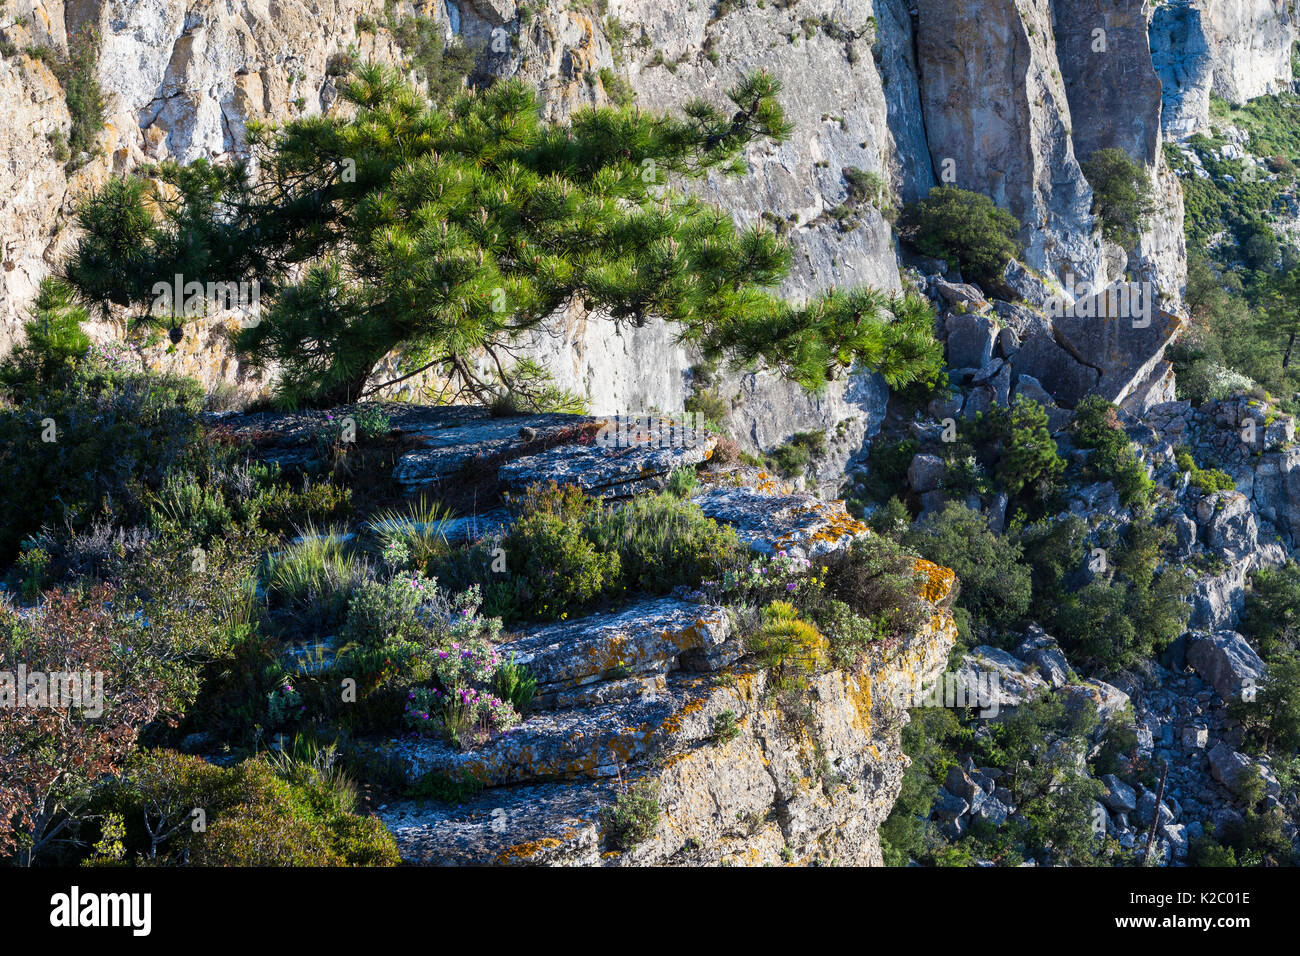 European black pine tree (Pinus nigra) growing on cliffs, Pradell-La Argentera Mountain Range Area of Natural Interest, Tarragona, Catalonia, Spain, May 2013. Stock Photo